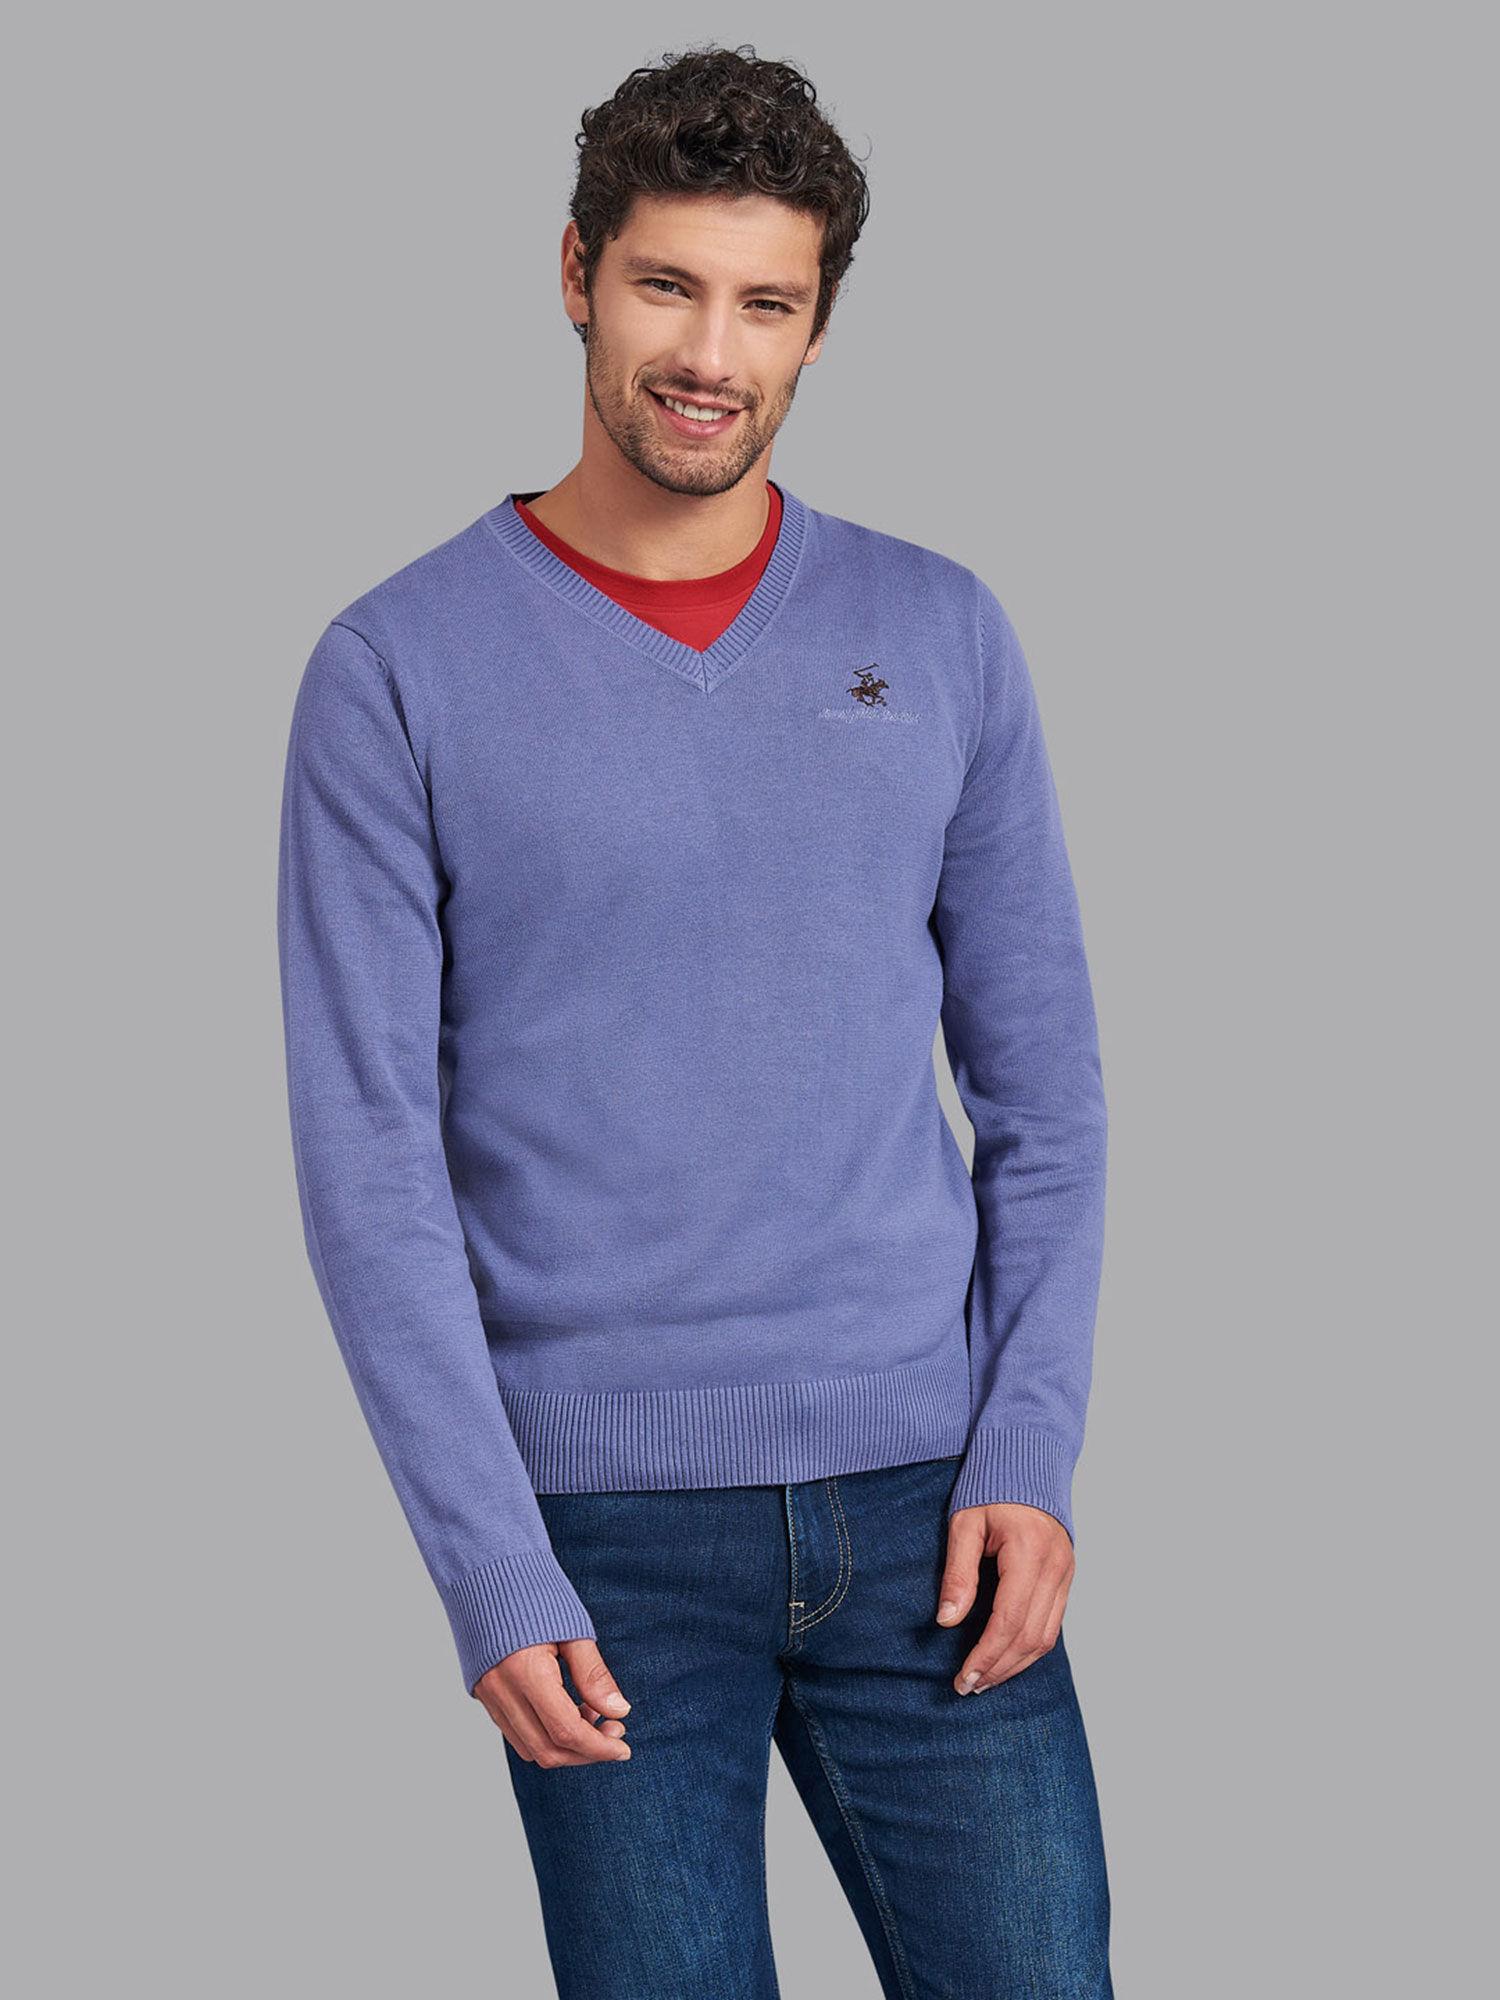 classic-v-neck-sweater